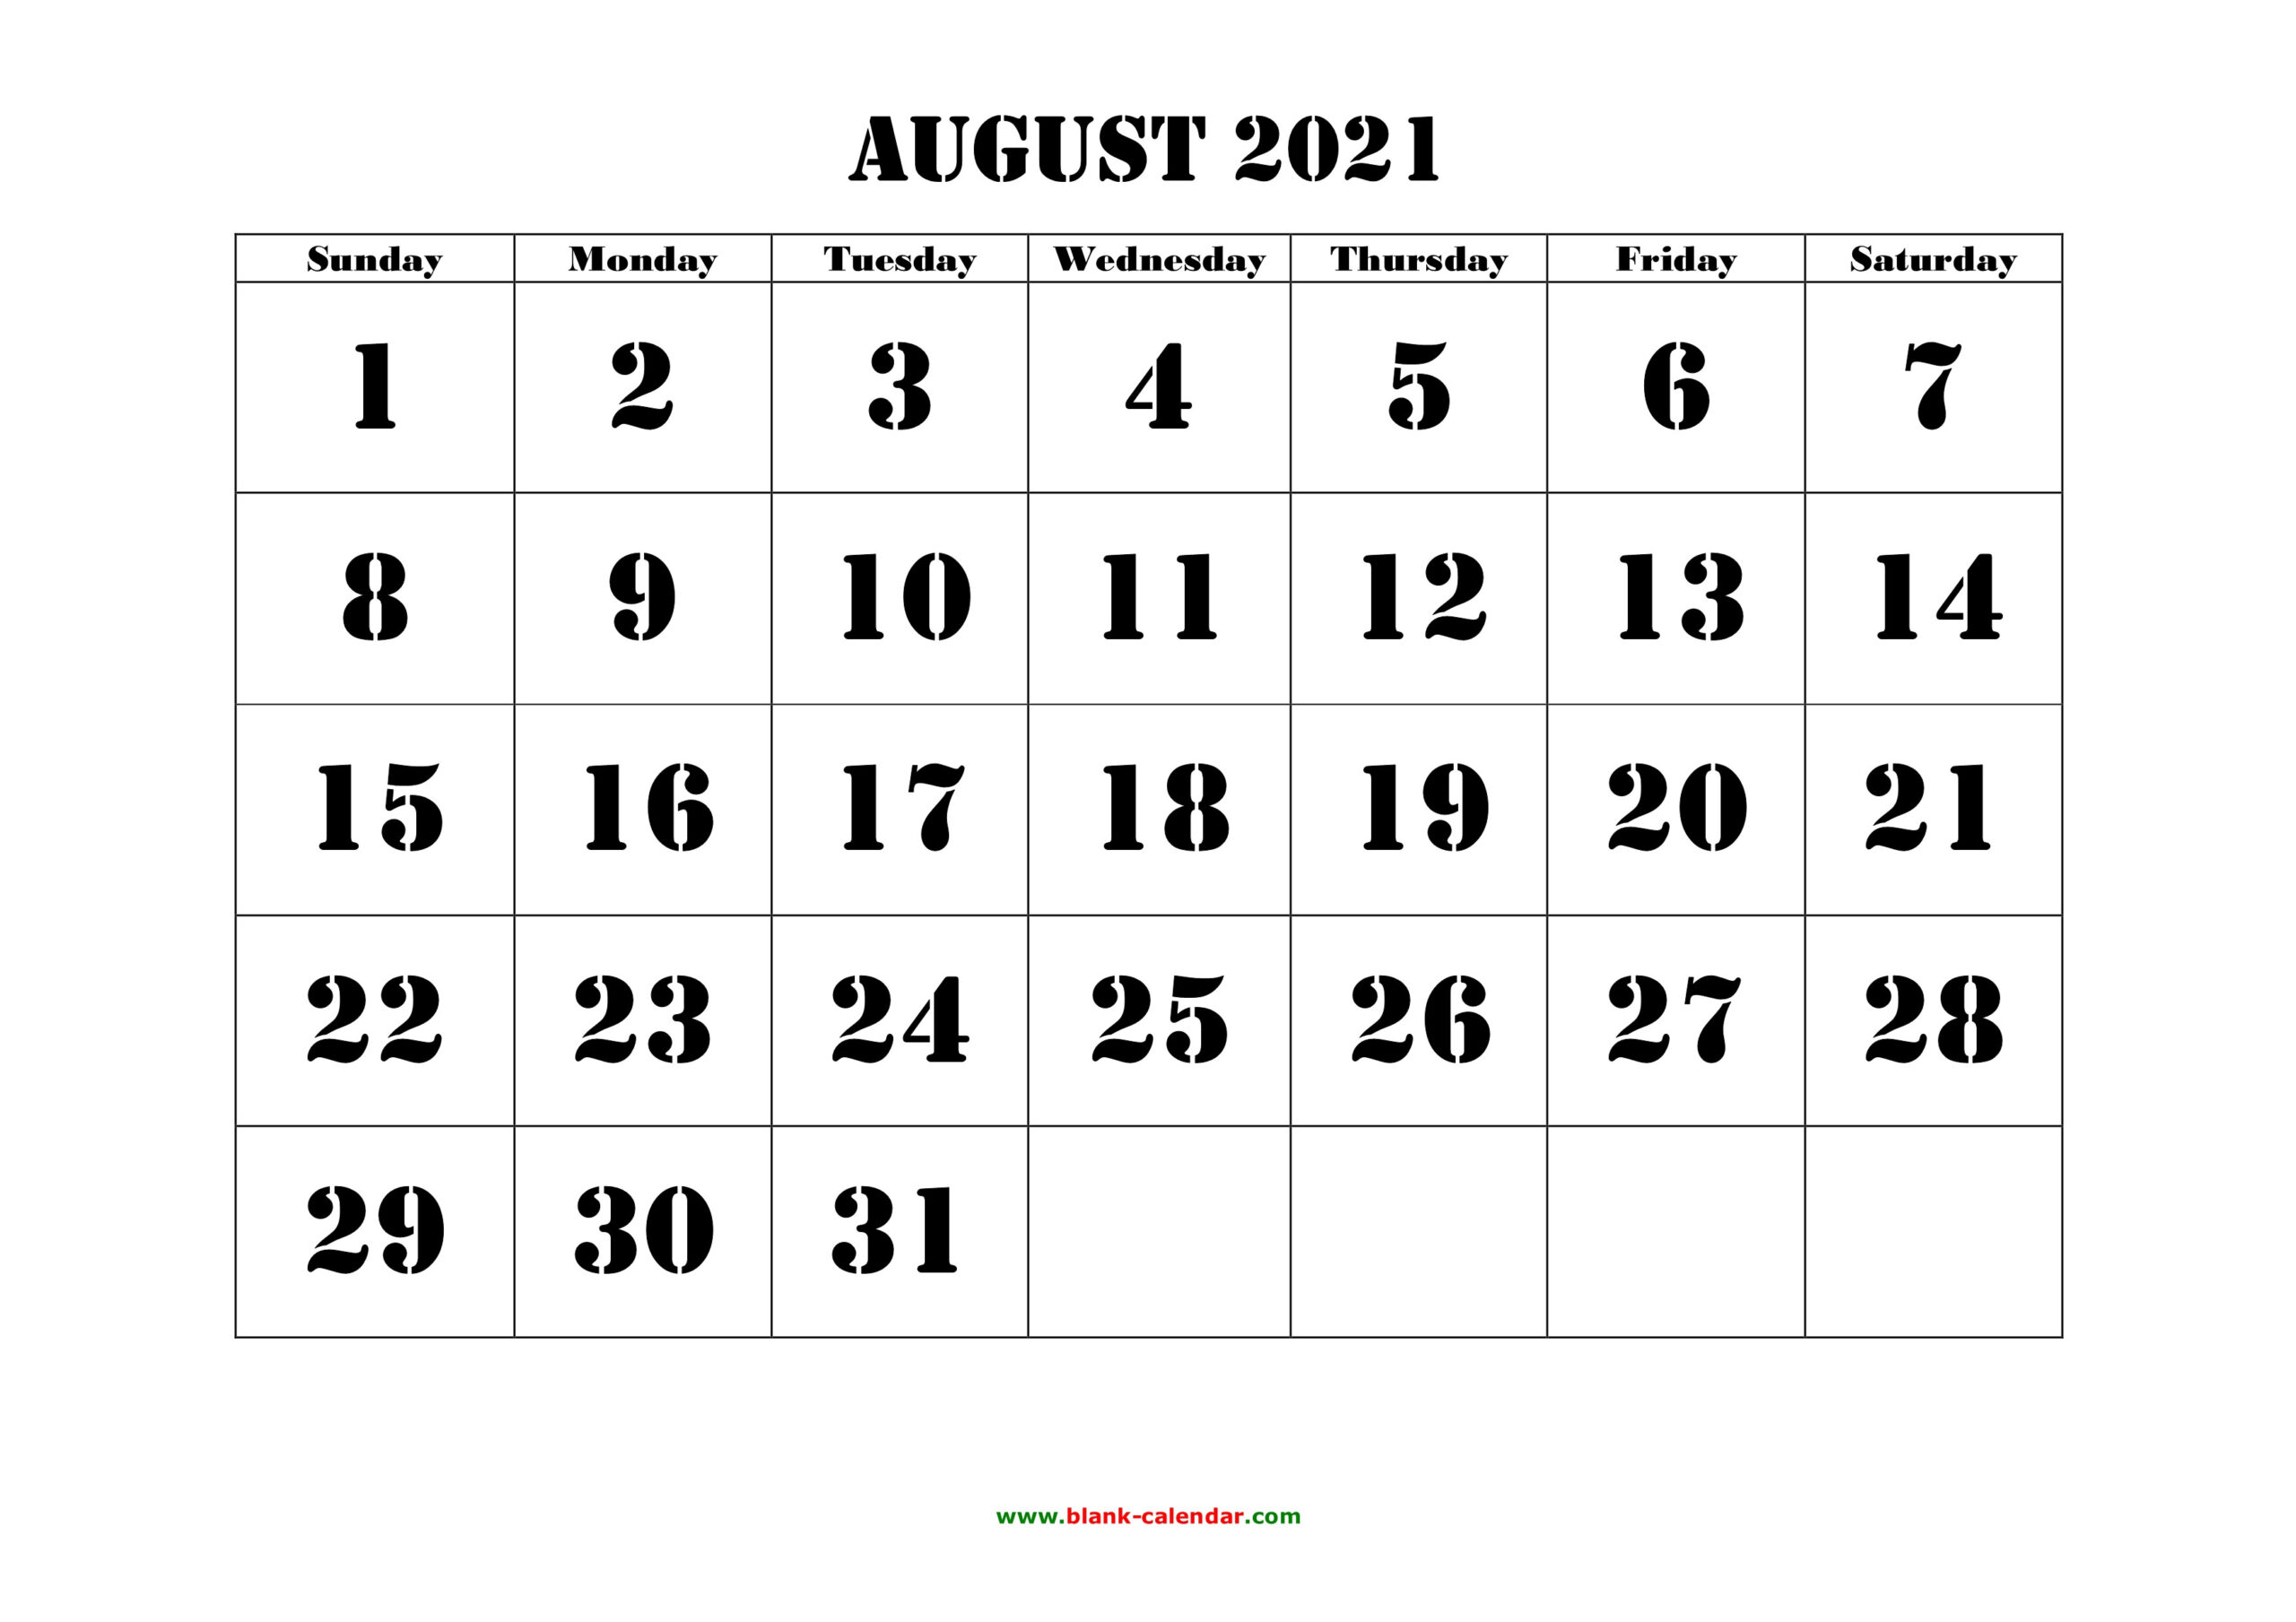 Calendar Of August 2021 | Calendar 2021-Hourly Aug 2021 Calendar